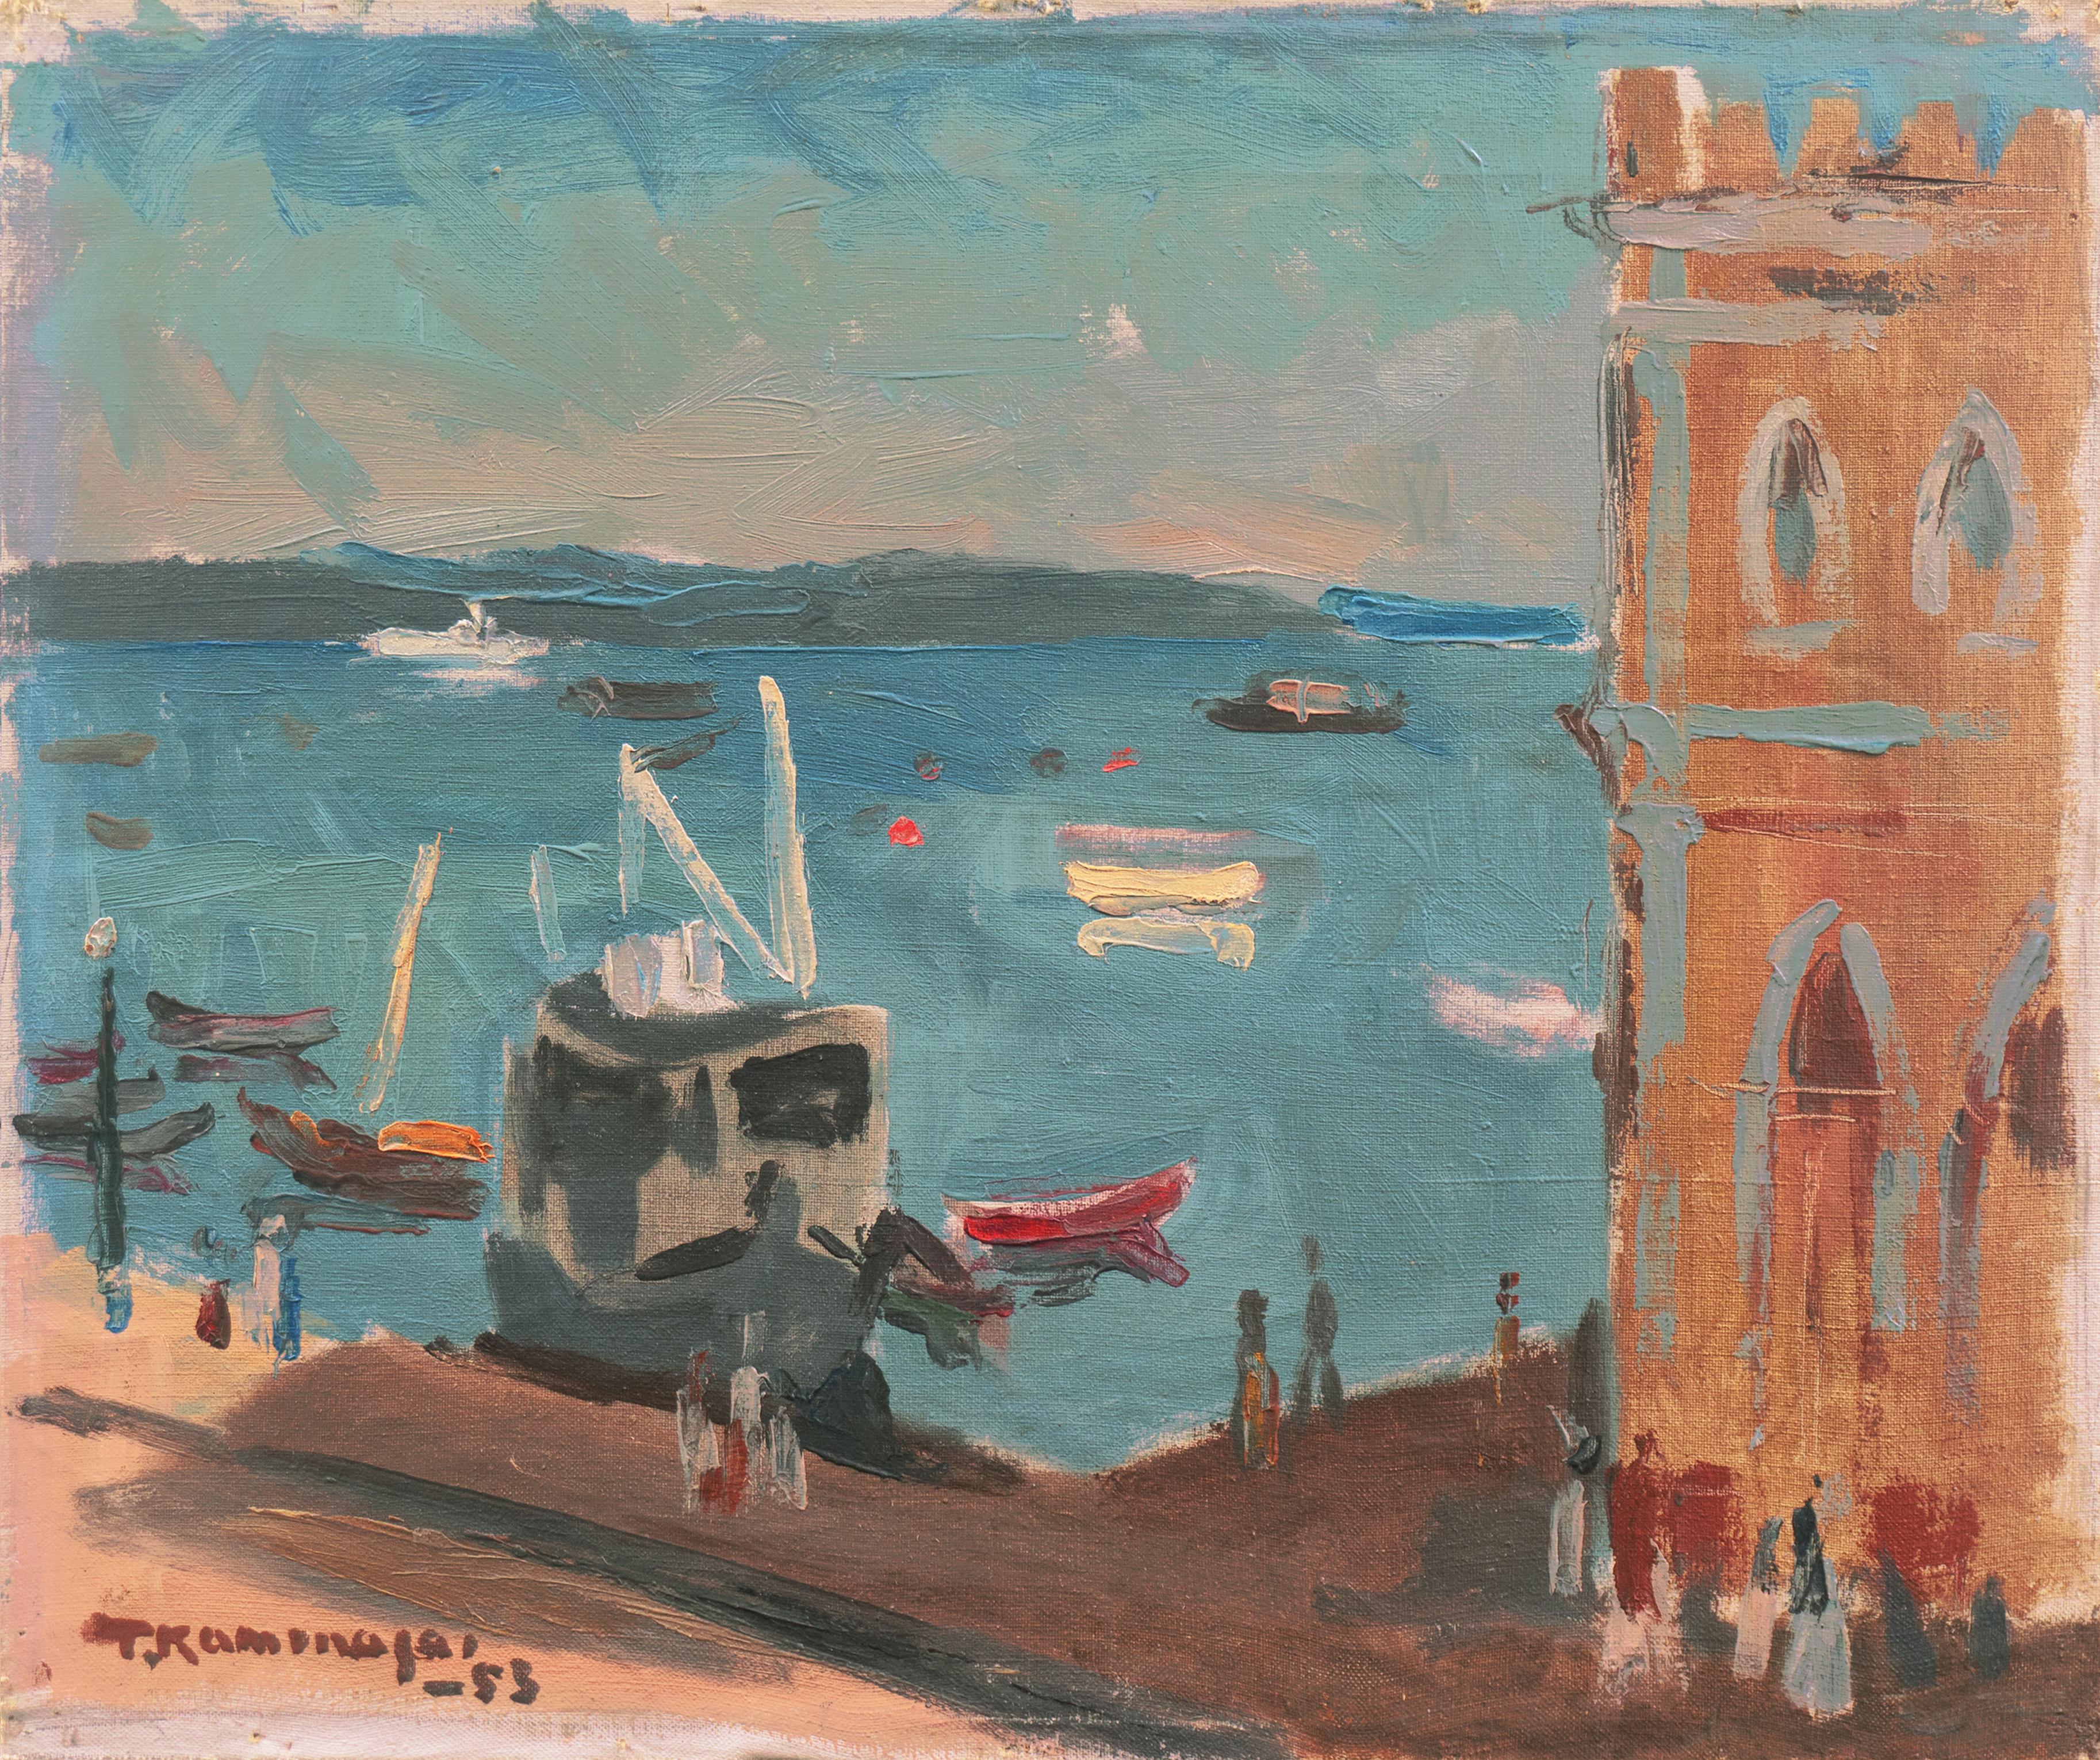 Tadashi Kaminagai Landscape Painting - 'Bahia Harbor, Brazil', French Post-Impressionist, Paris, Rio de Janeiro, Japan